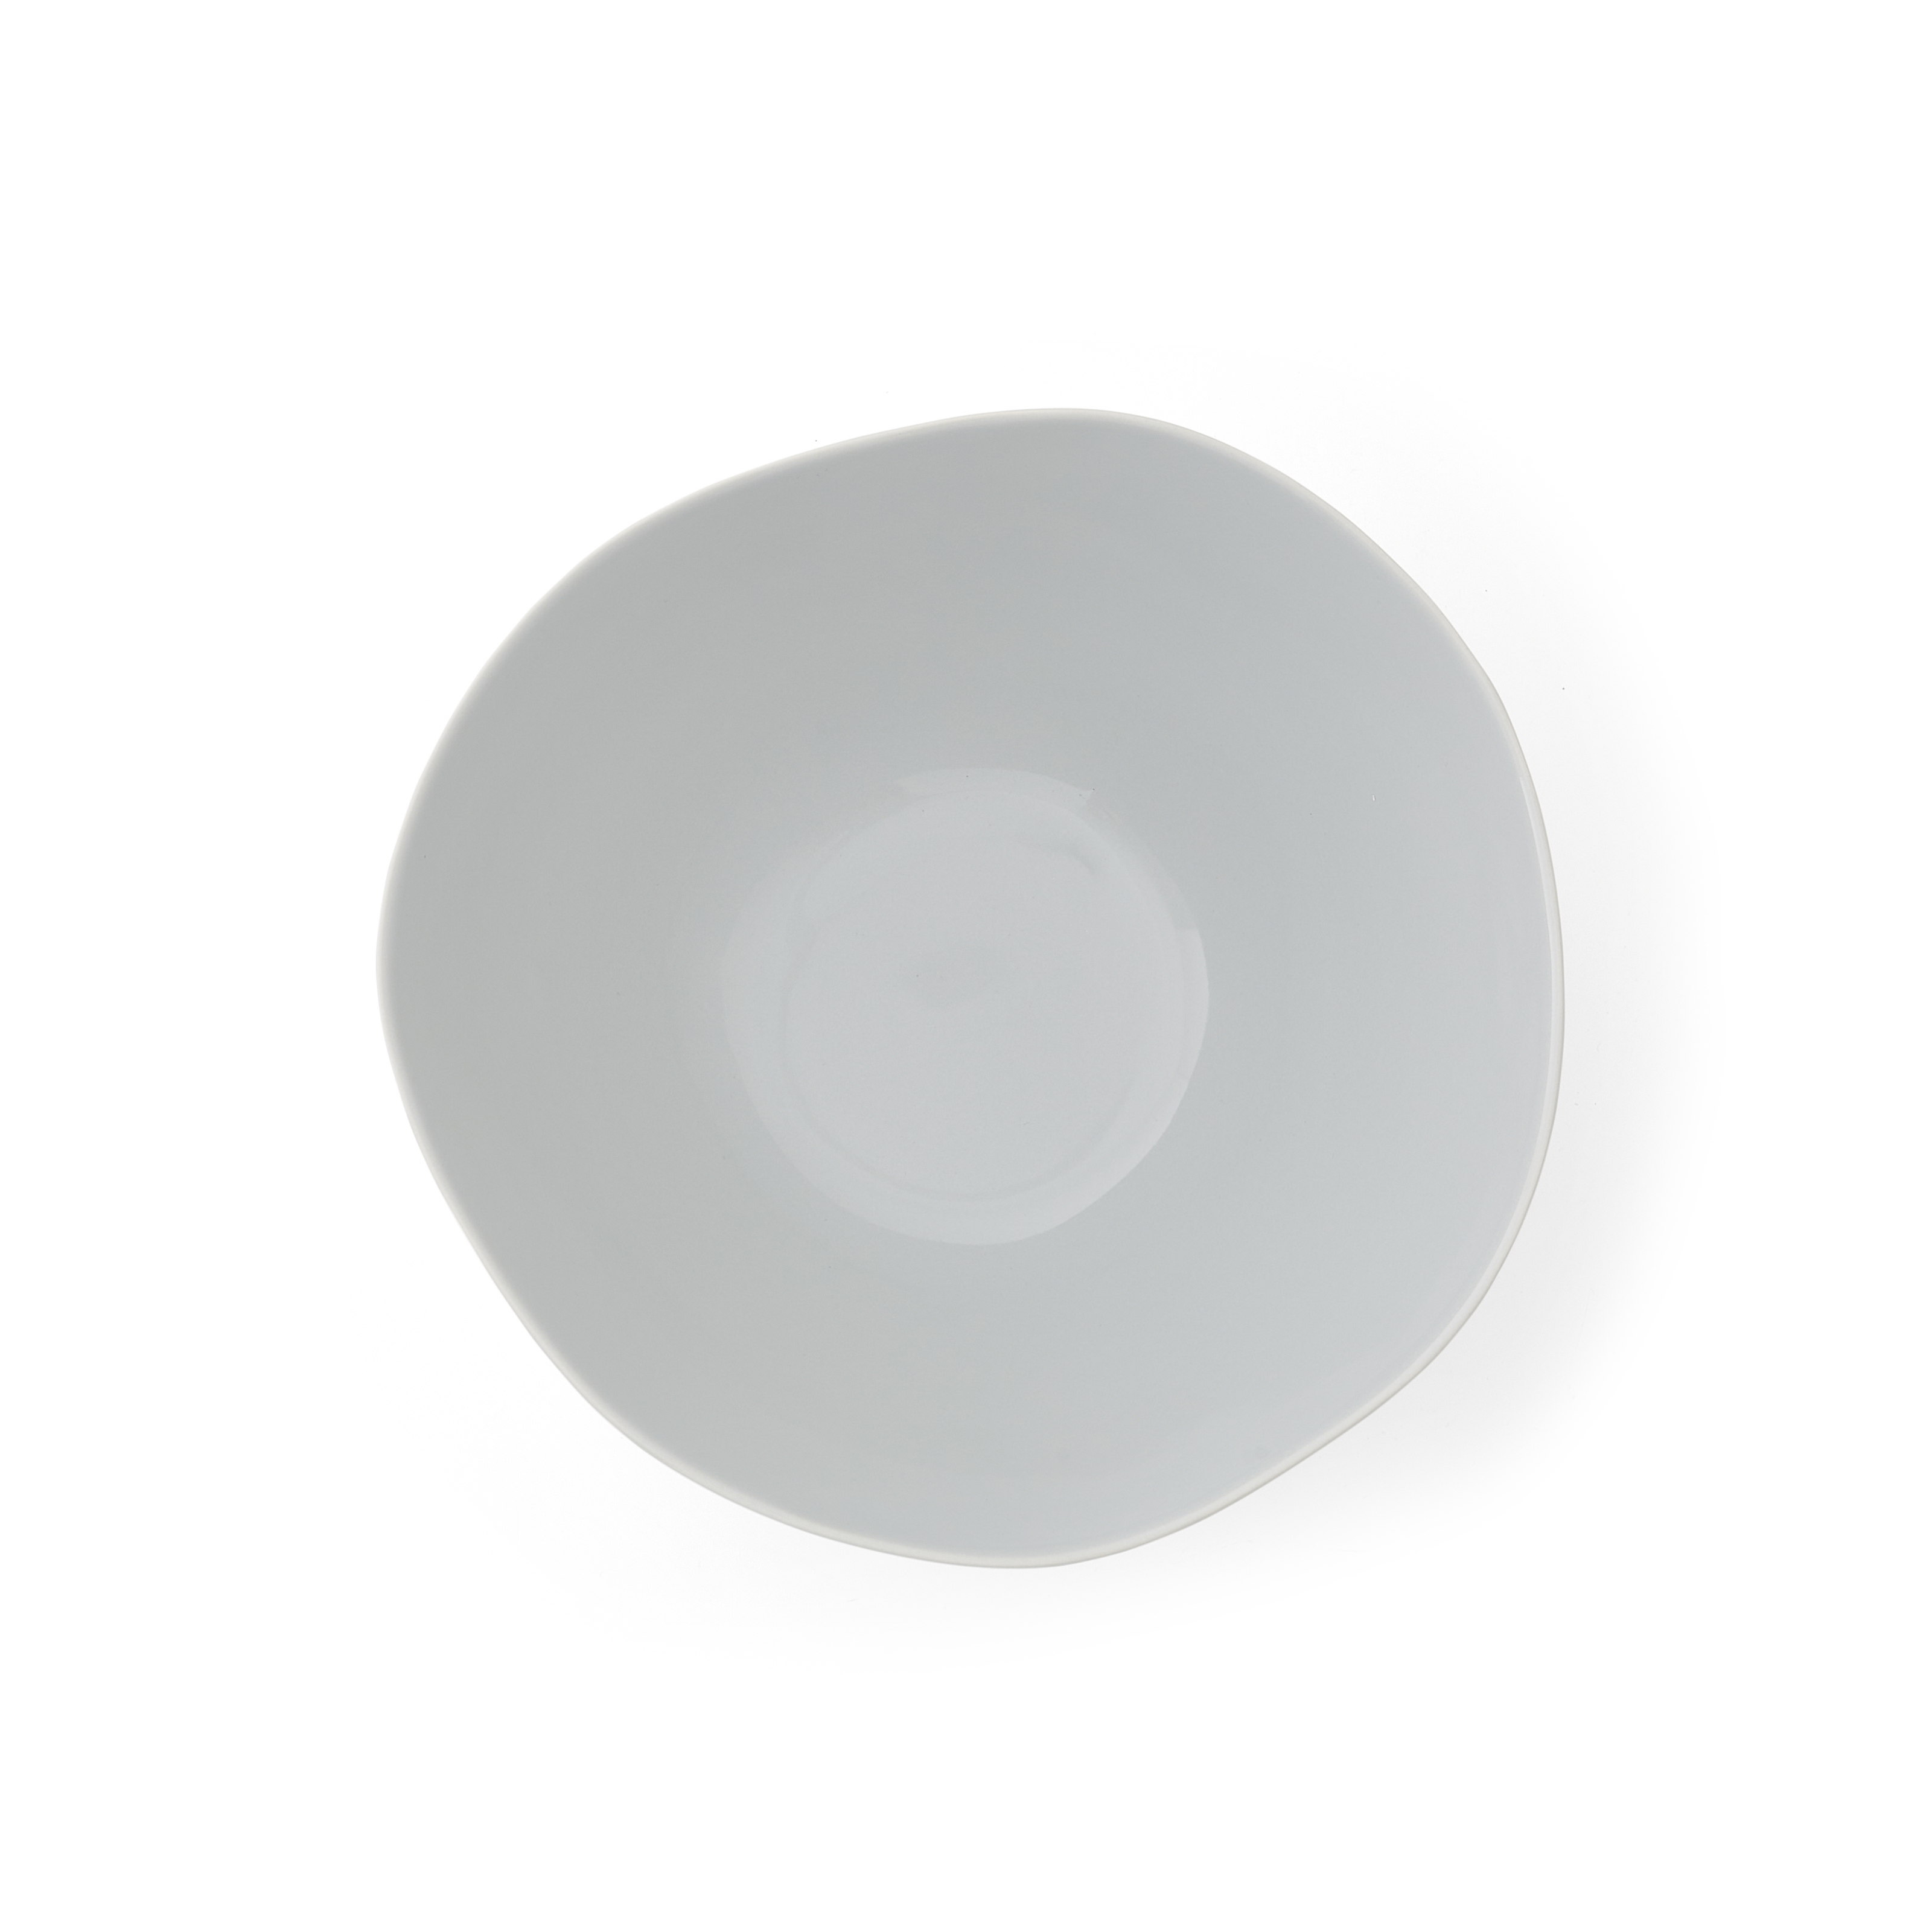 Sophie Conran Arbor Large Serving Bowl- Dove Grey image number null